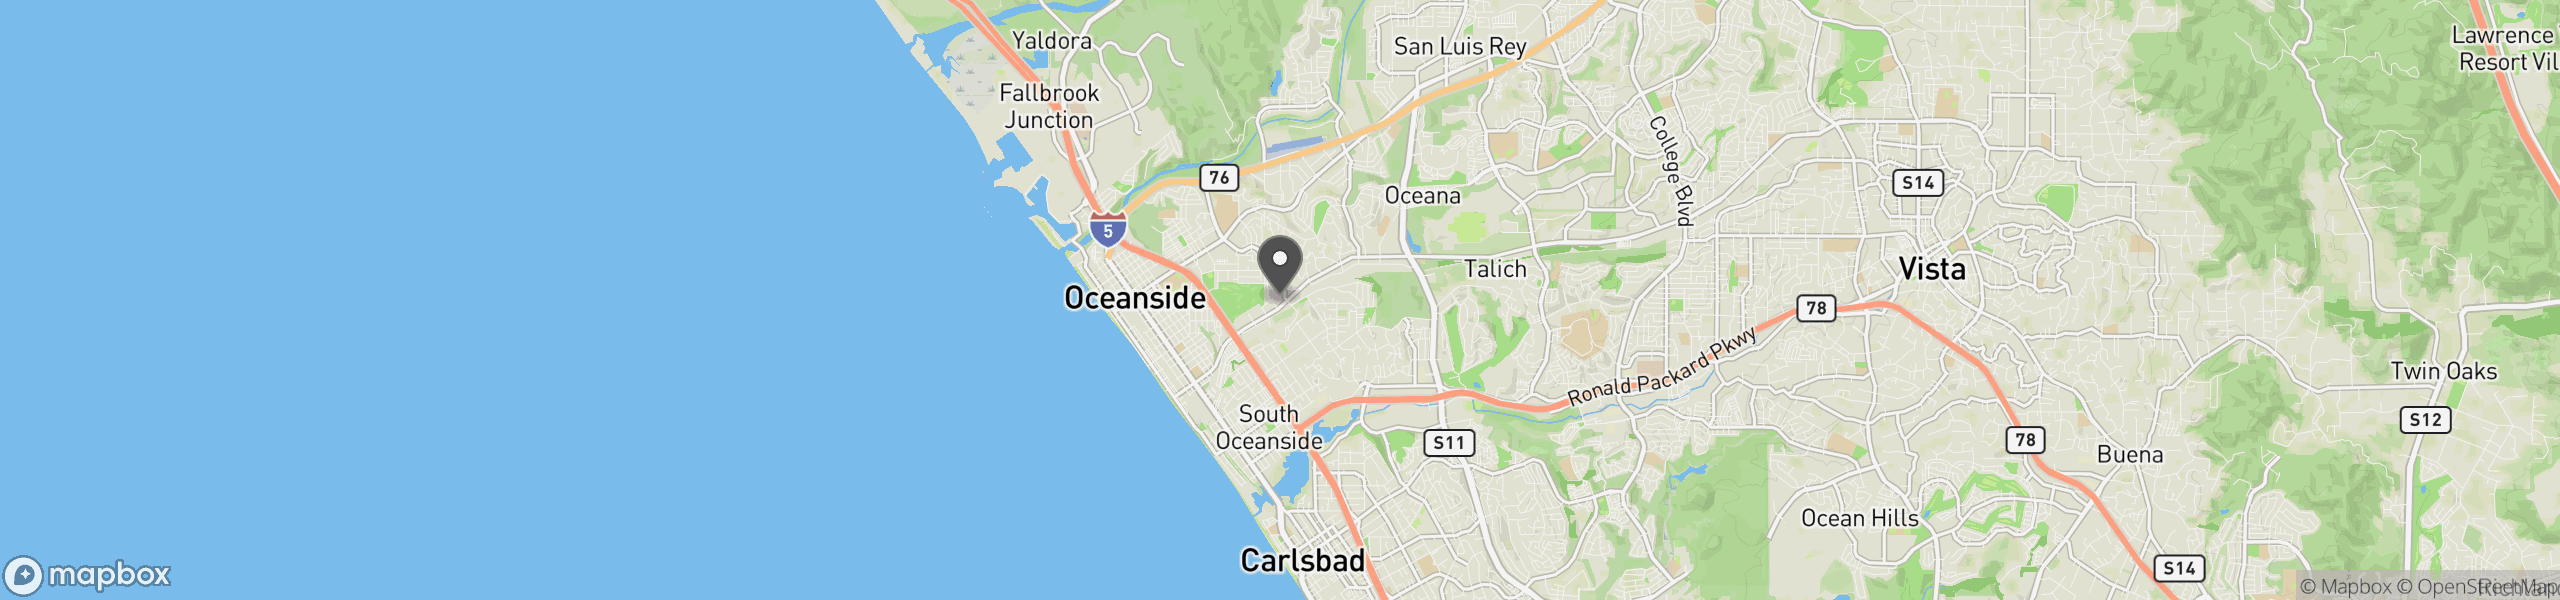 Oceanside, CA 92054